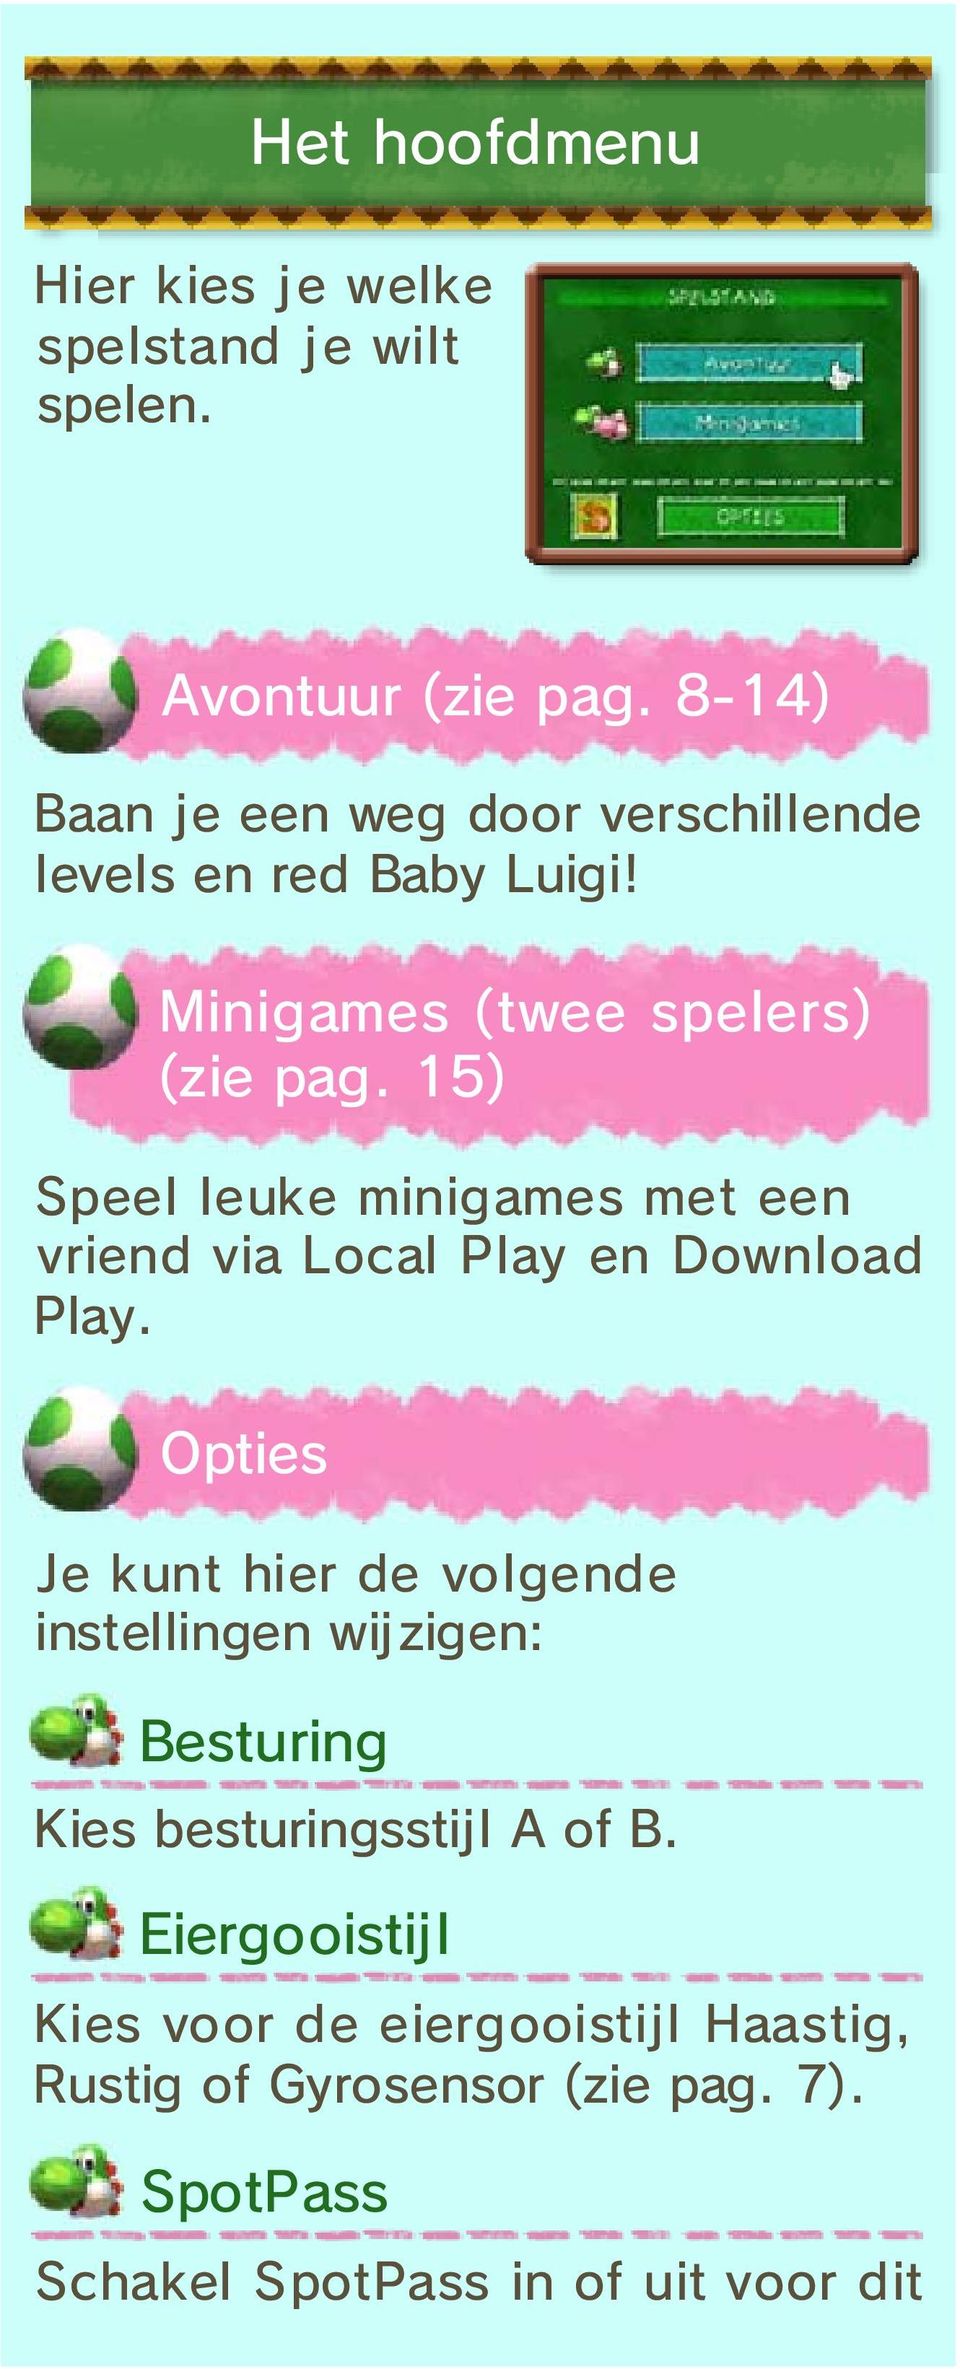 15) Speel leuke minigames met een vriend via Local Play en Download Play.